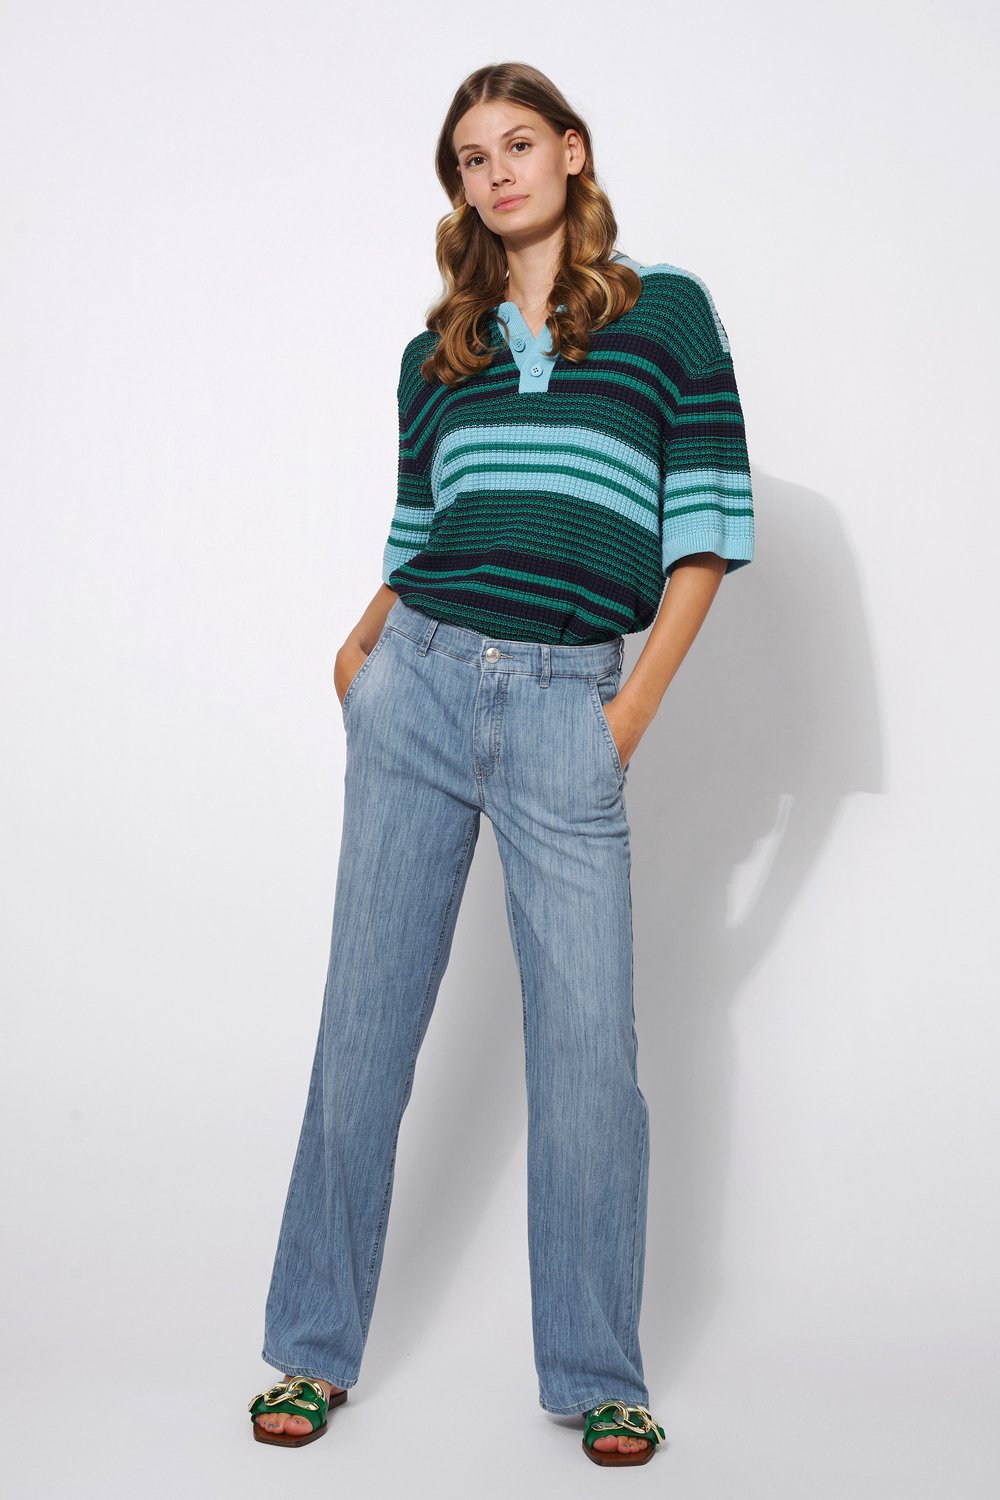 Light wide leg jeans | Style »Audrey1_085« light blue